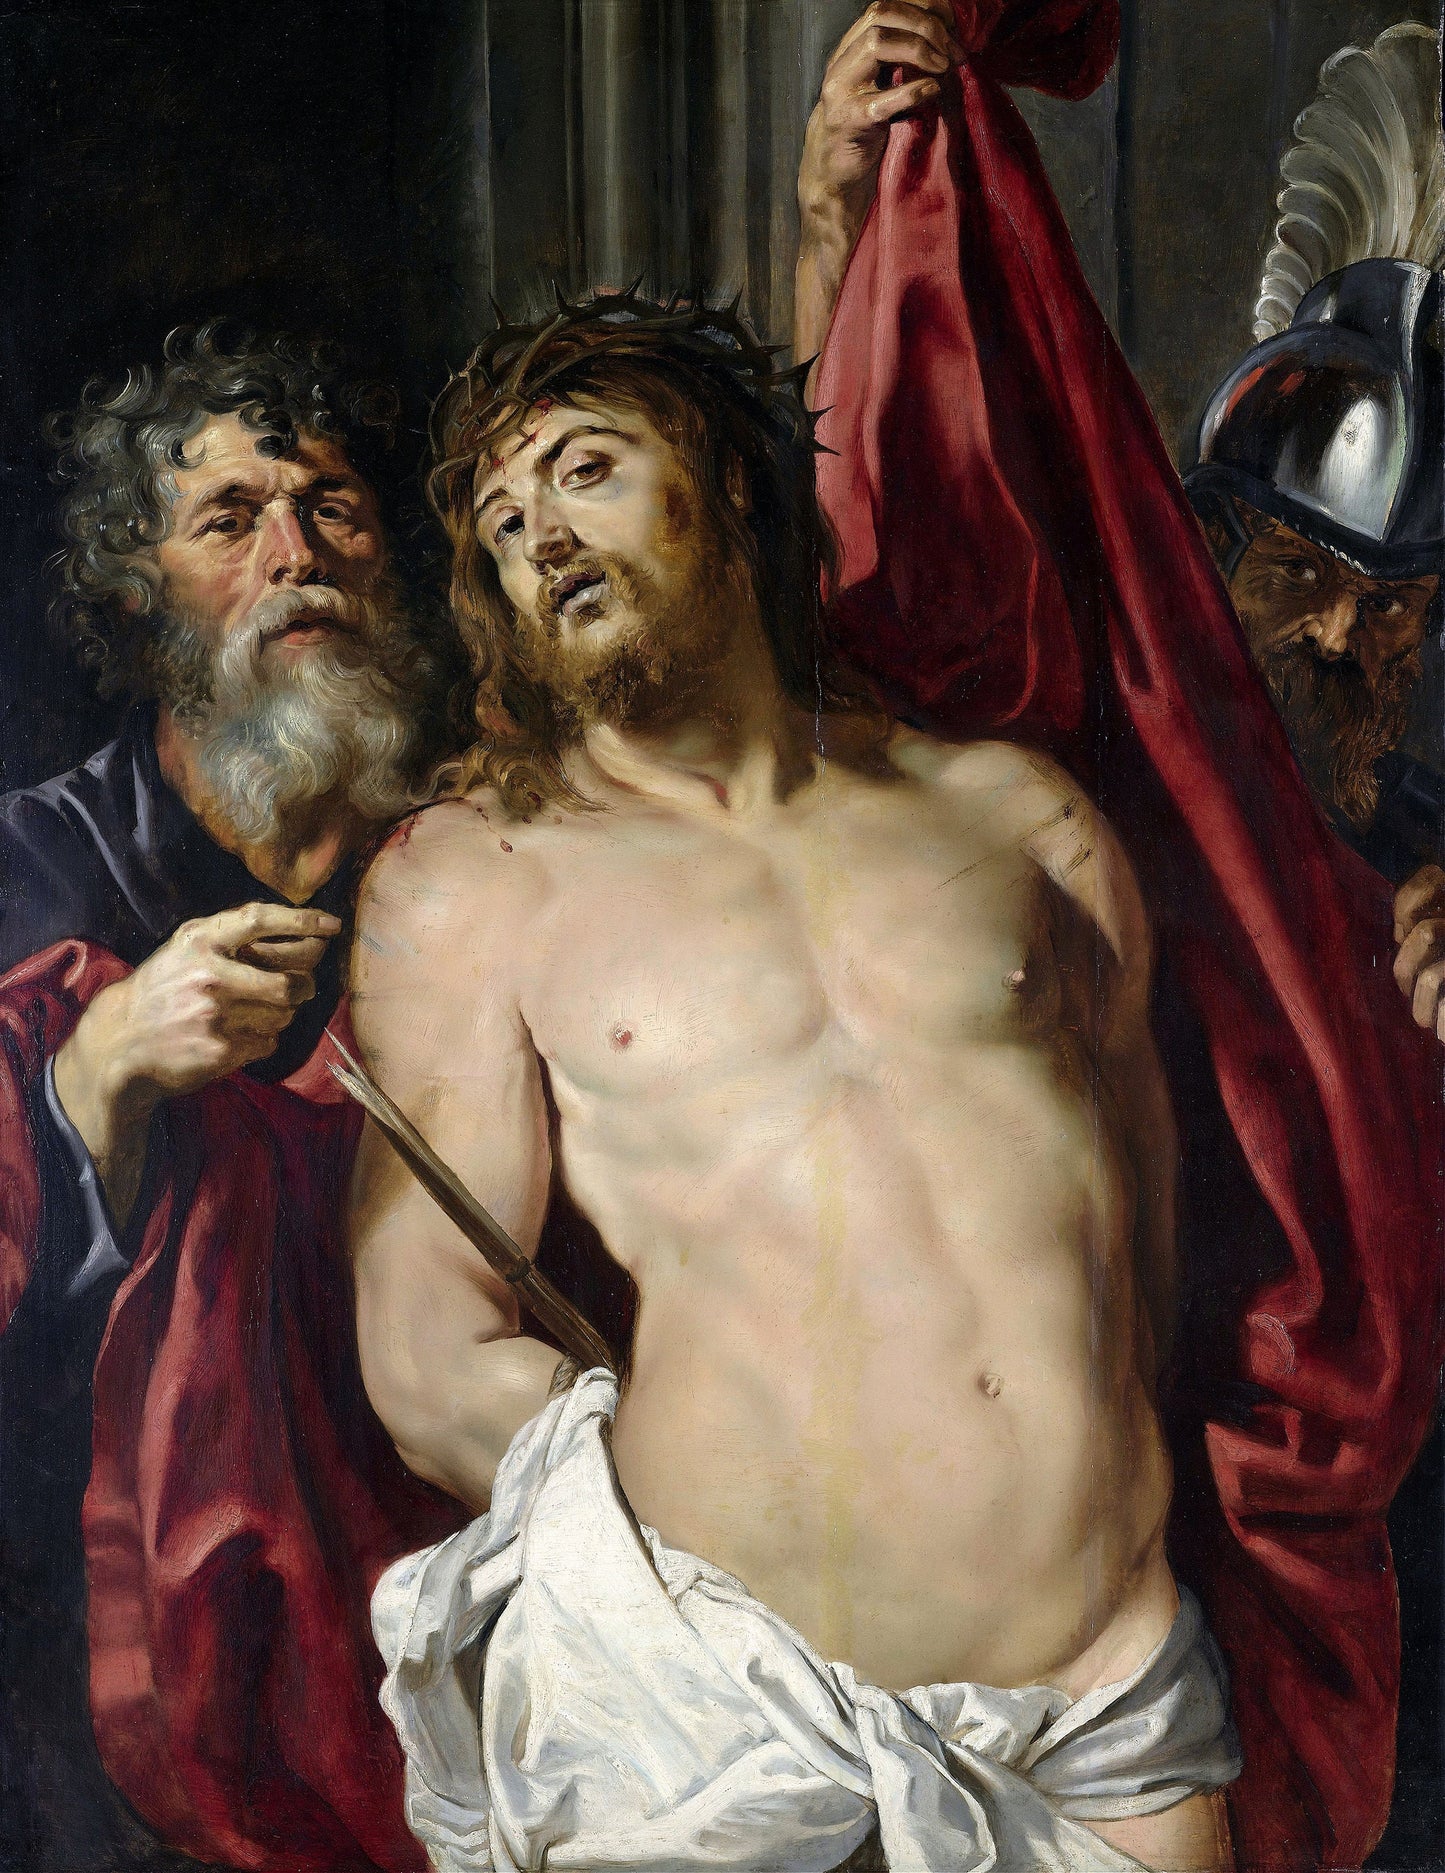 Peter Paul Rubens Baroque Paintings Set 2 [25 Images]